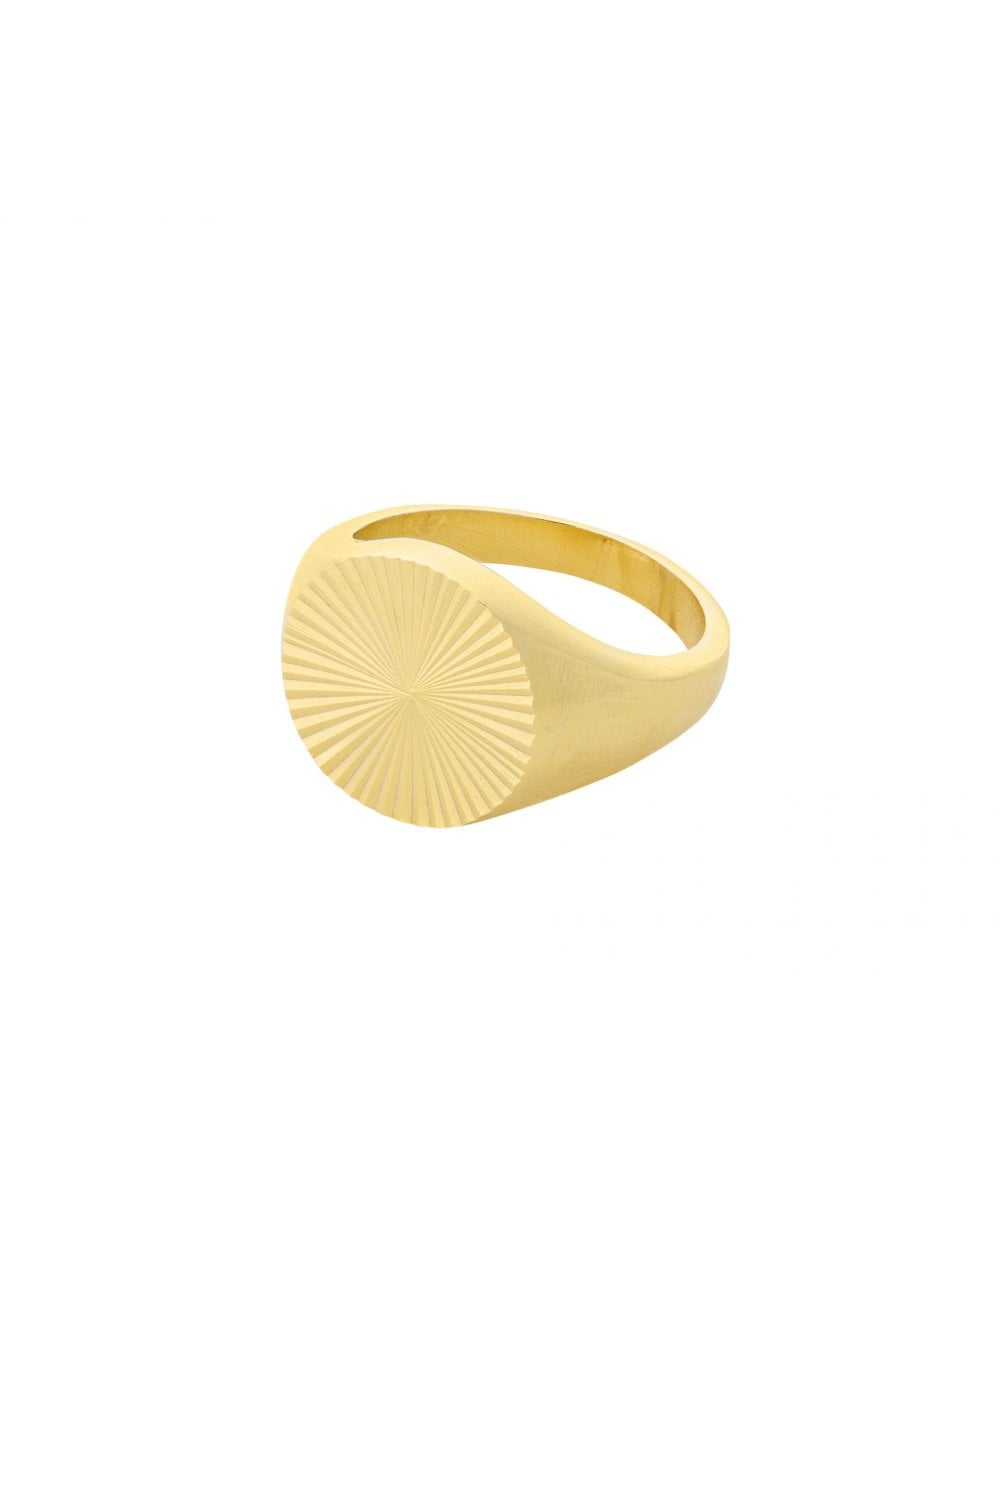 Ocean Star Signet Ring in Gold